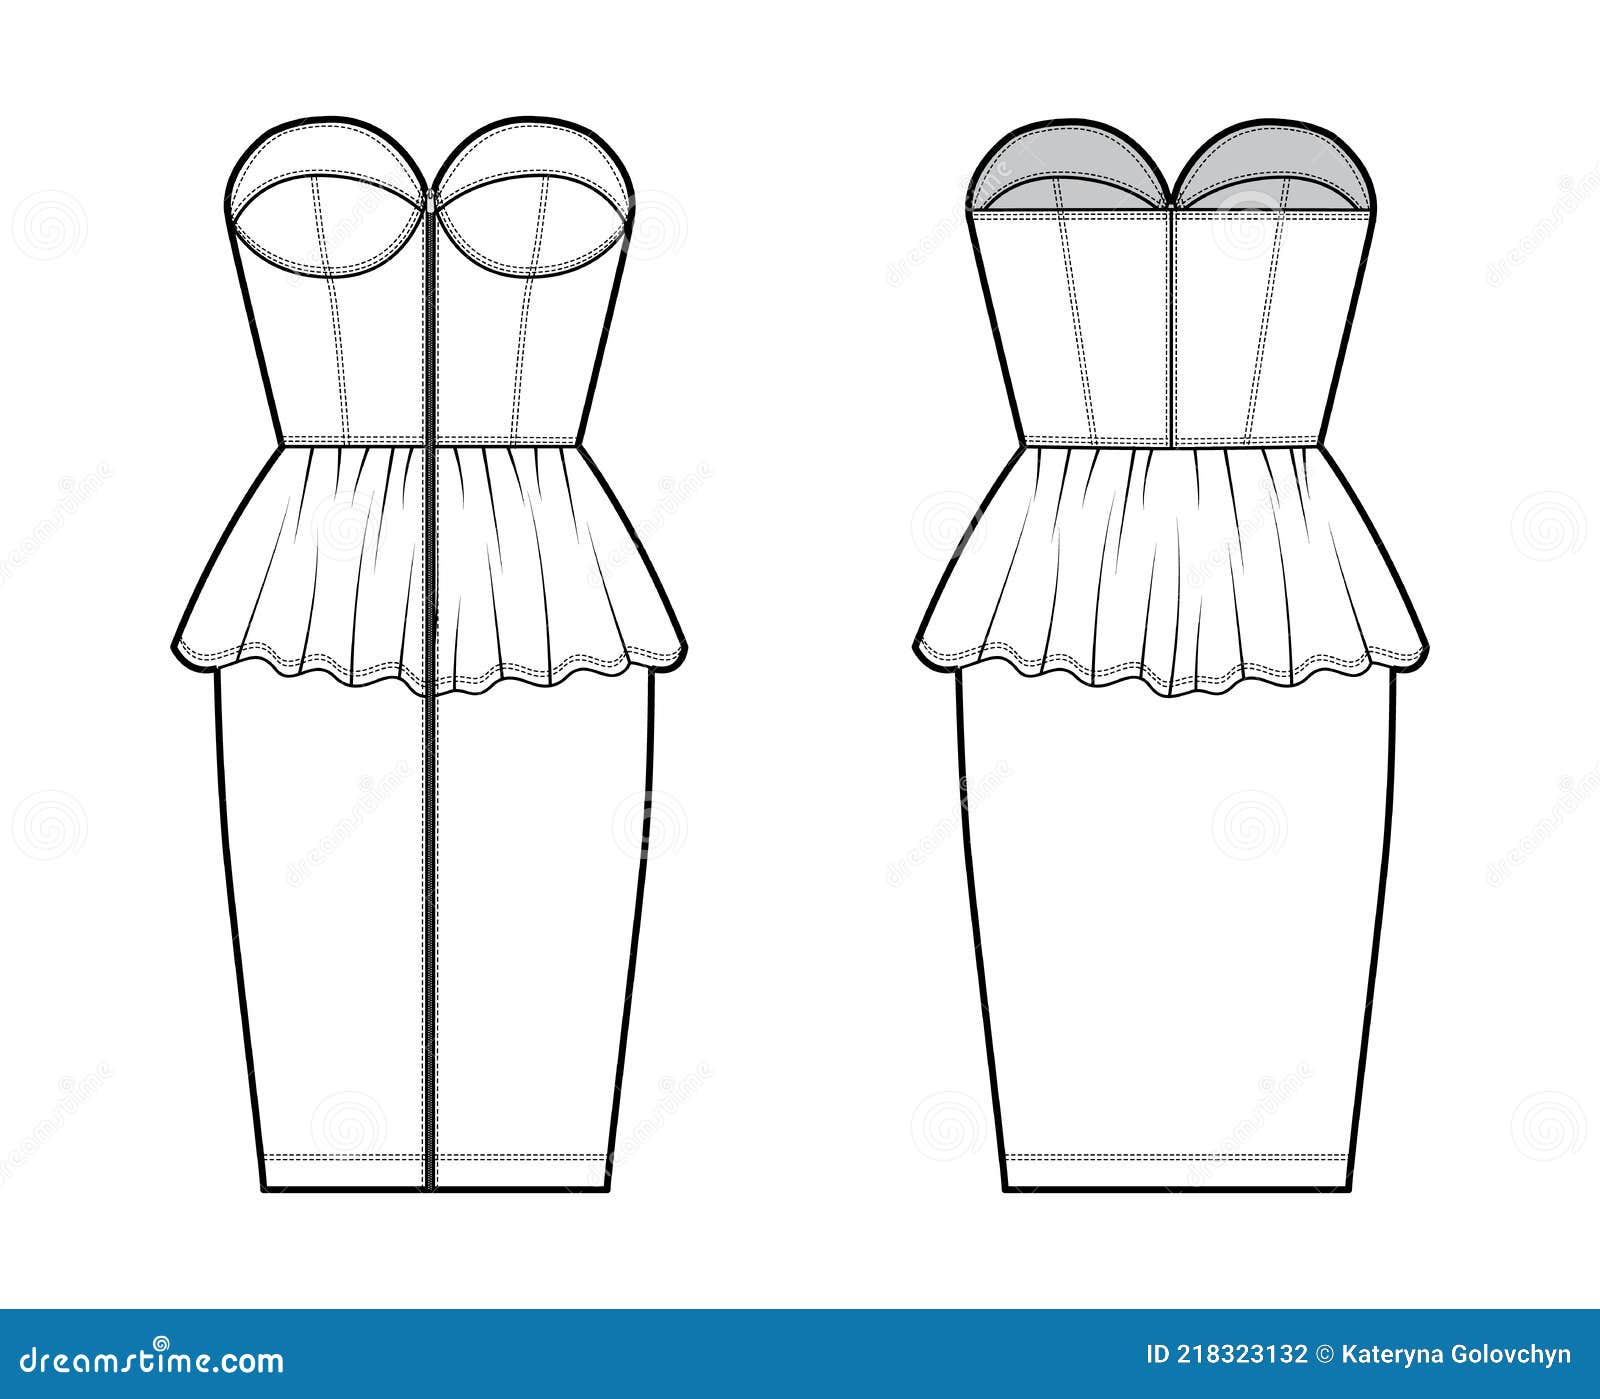 Bustier Dress Technical Fashion Illustration With Shoulder Straps ...